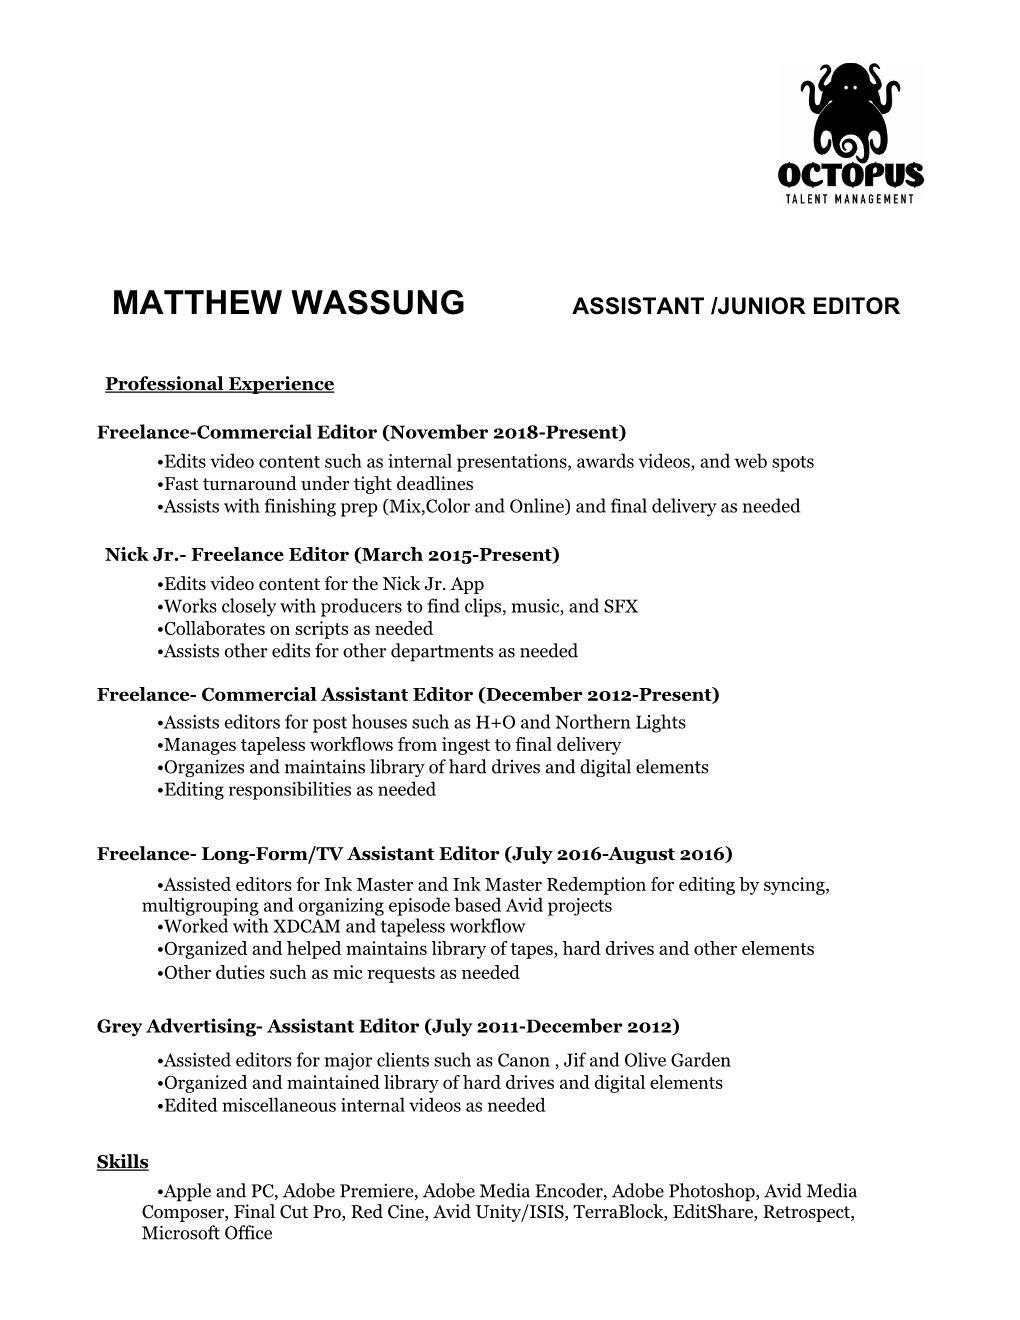 Matthew Wassung Assistant /Junior Editor